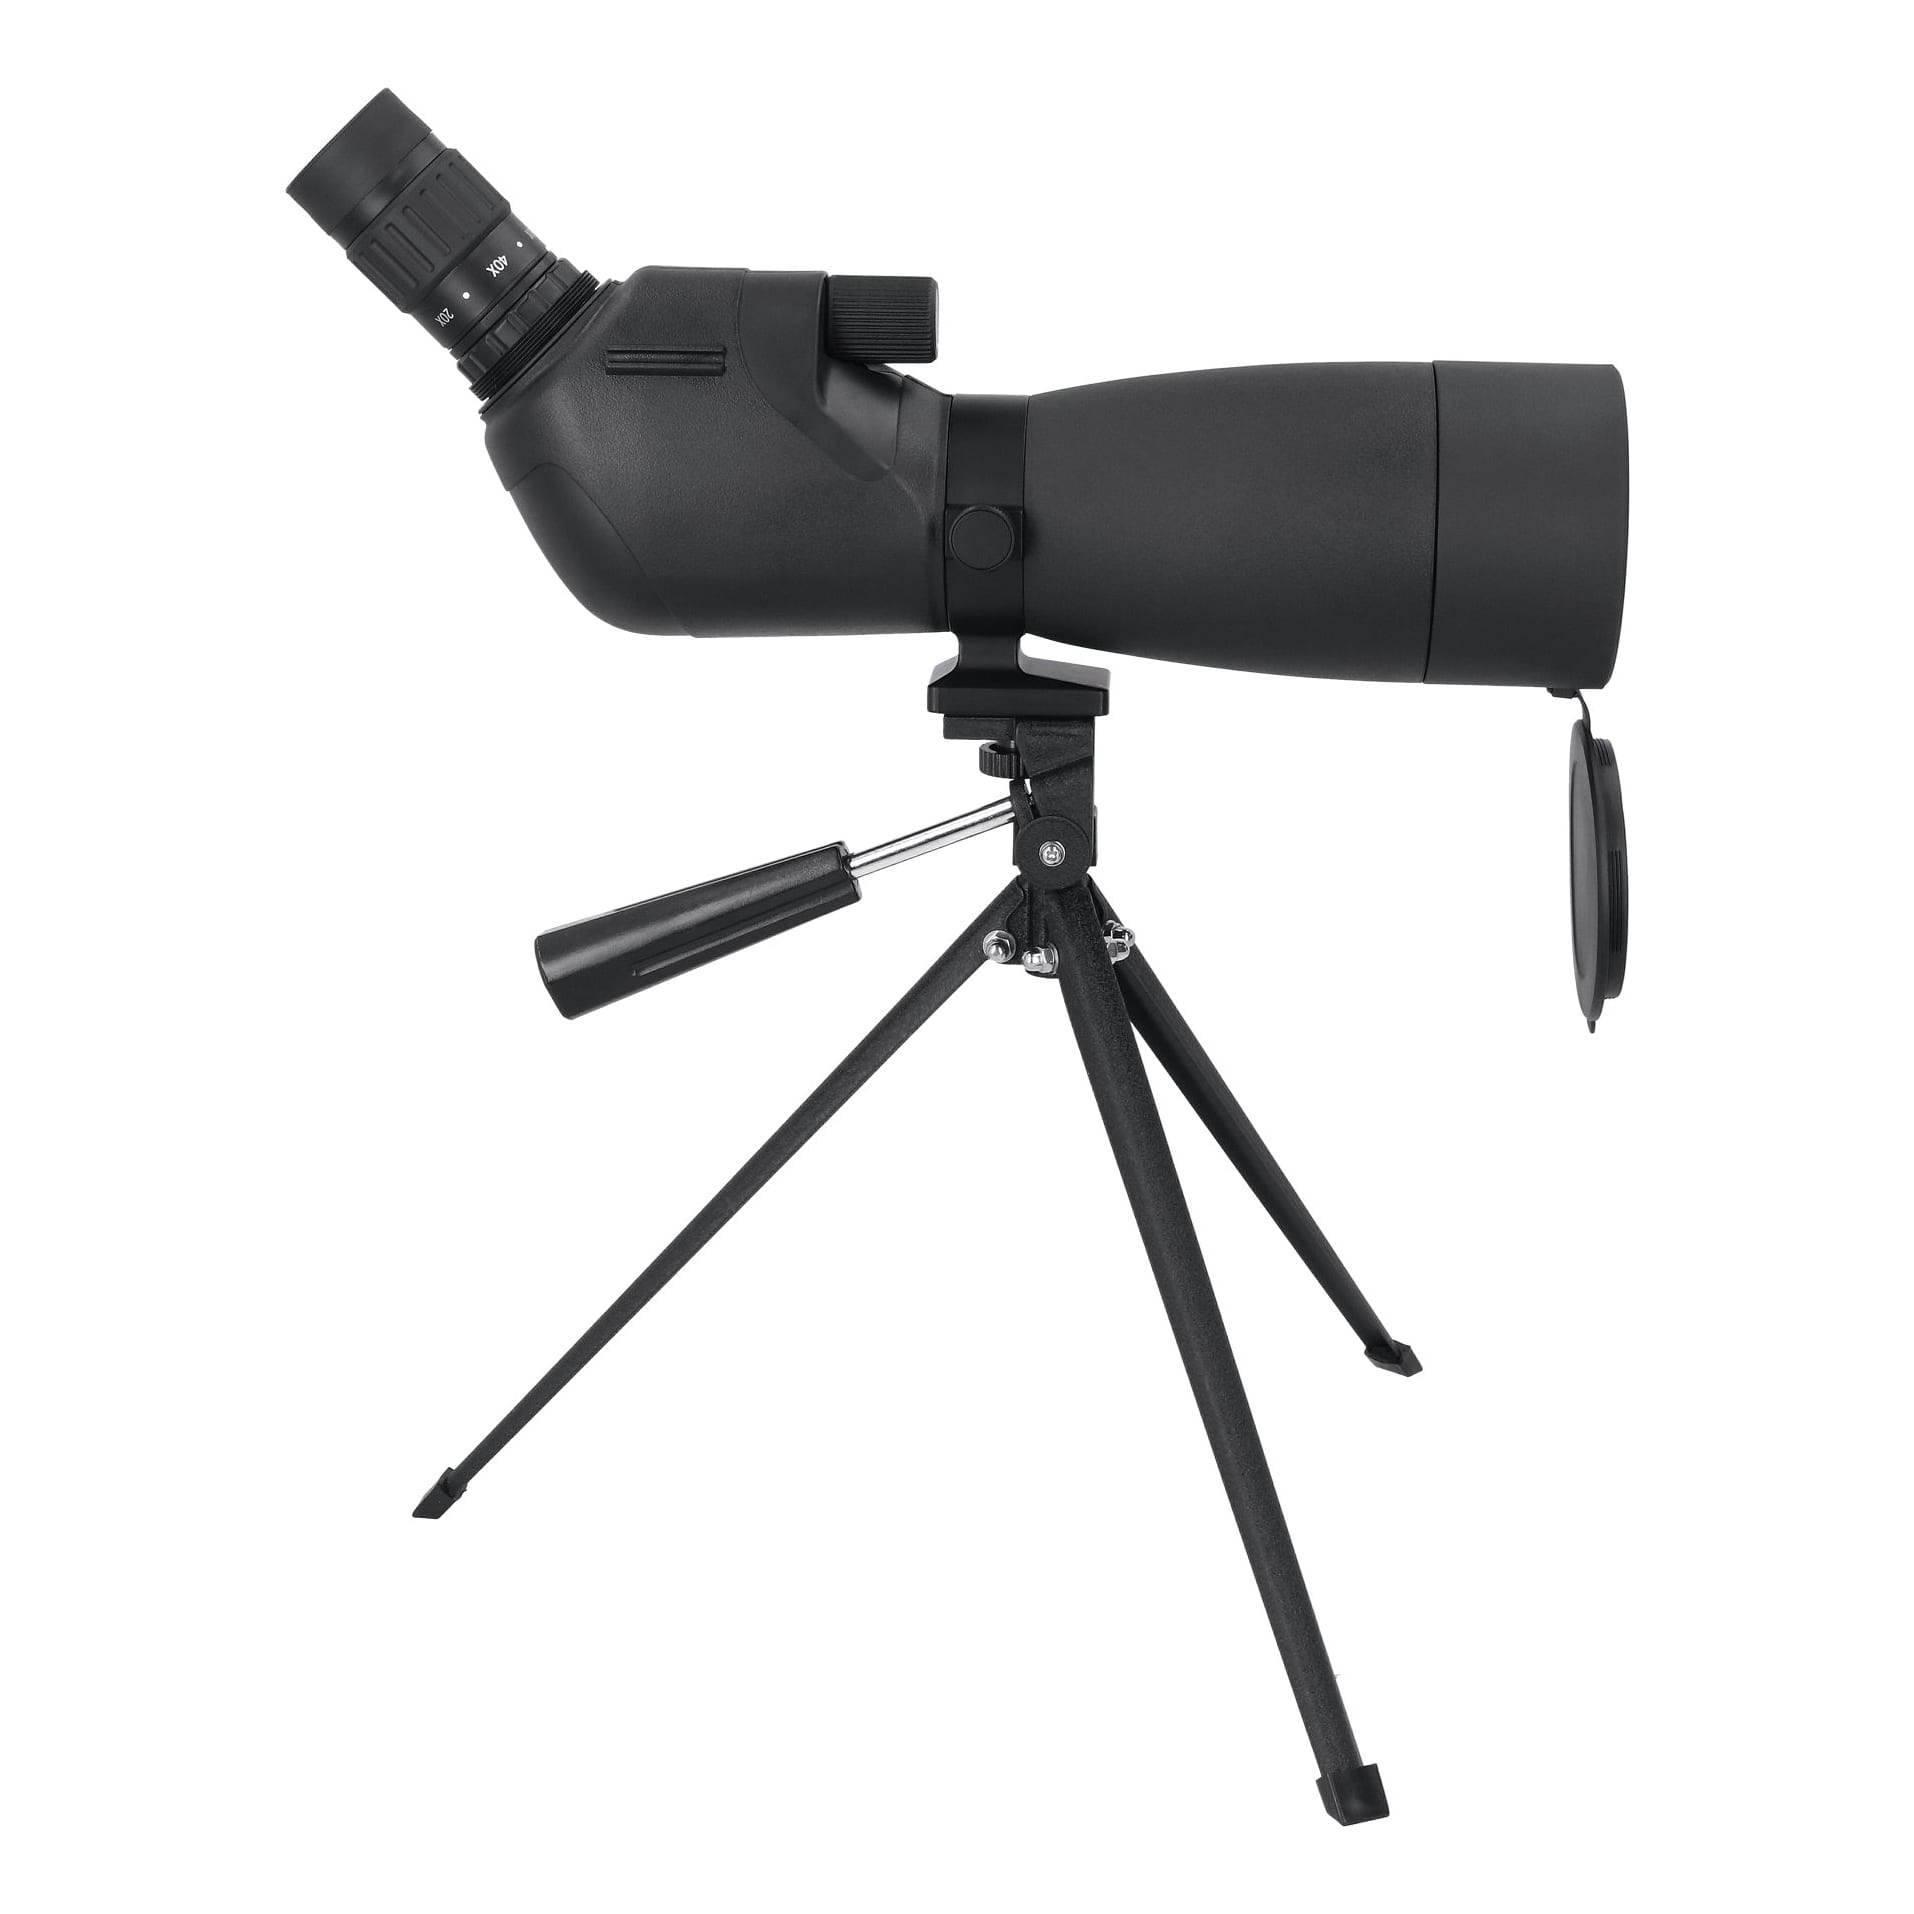 Pursuit® 20-60x60mm Spotting Scope Kit